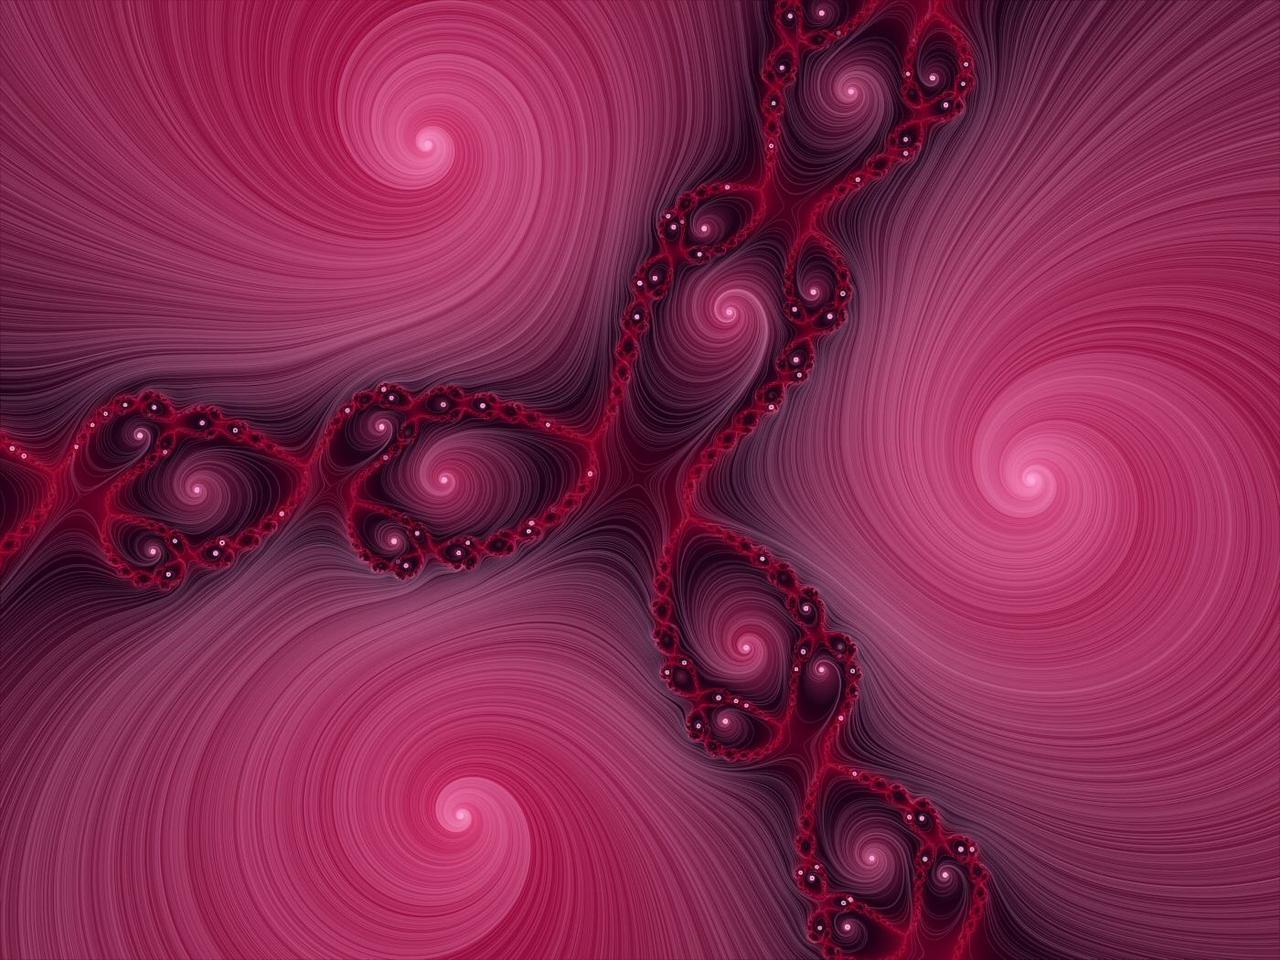 Pink Swirl Fractal Wallpaper 1280x960 px Free Download